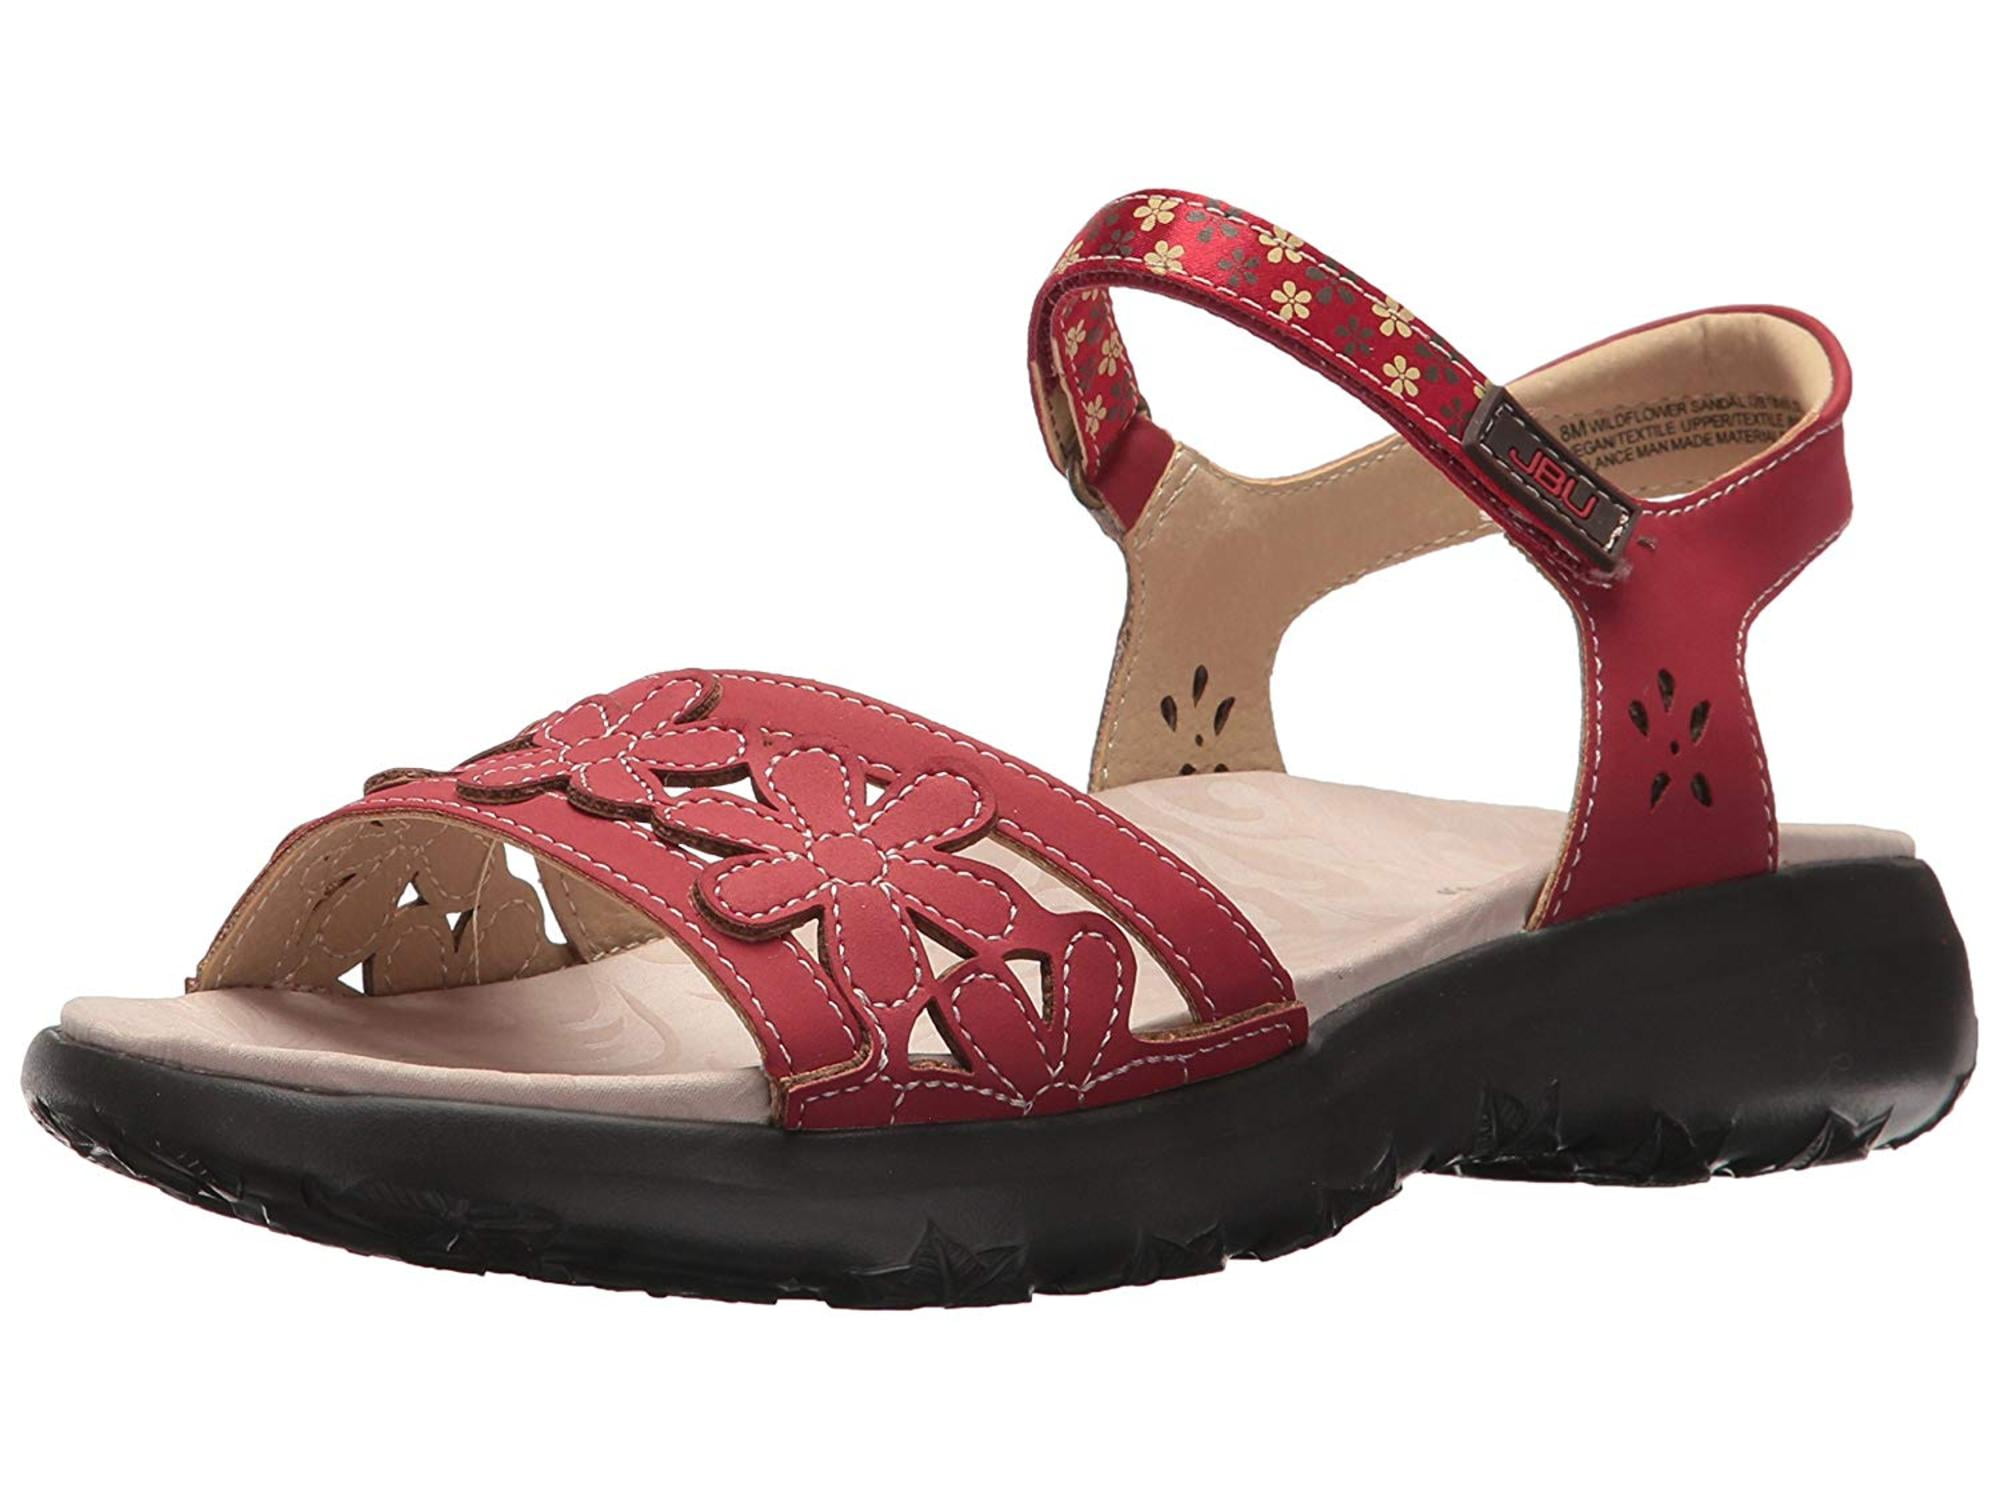 jbu by jambu women's wildflower sandal, red, 8 m us - Walmart.com